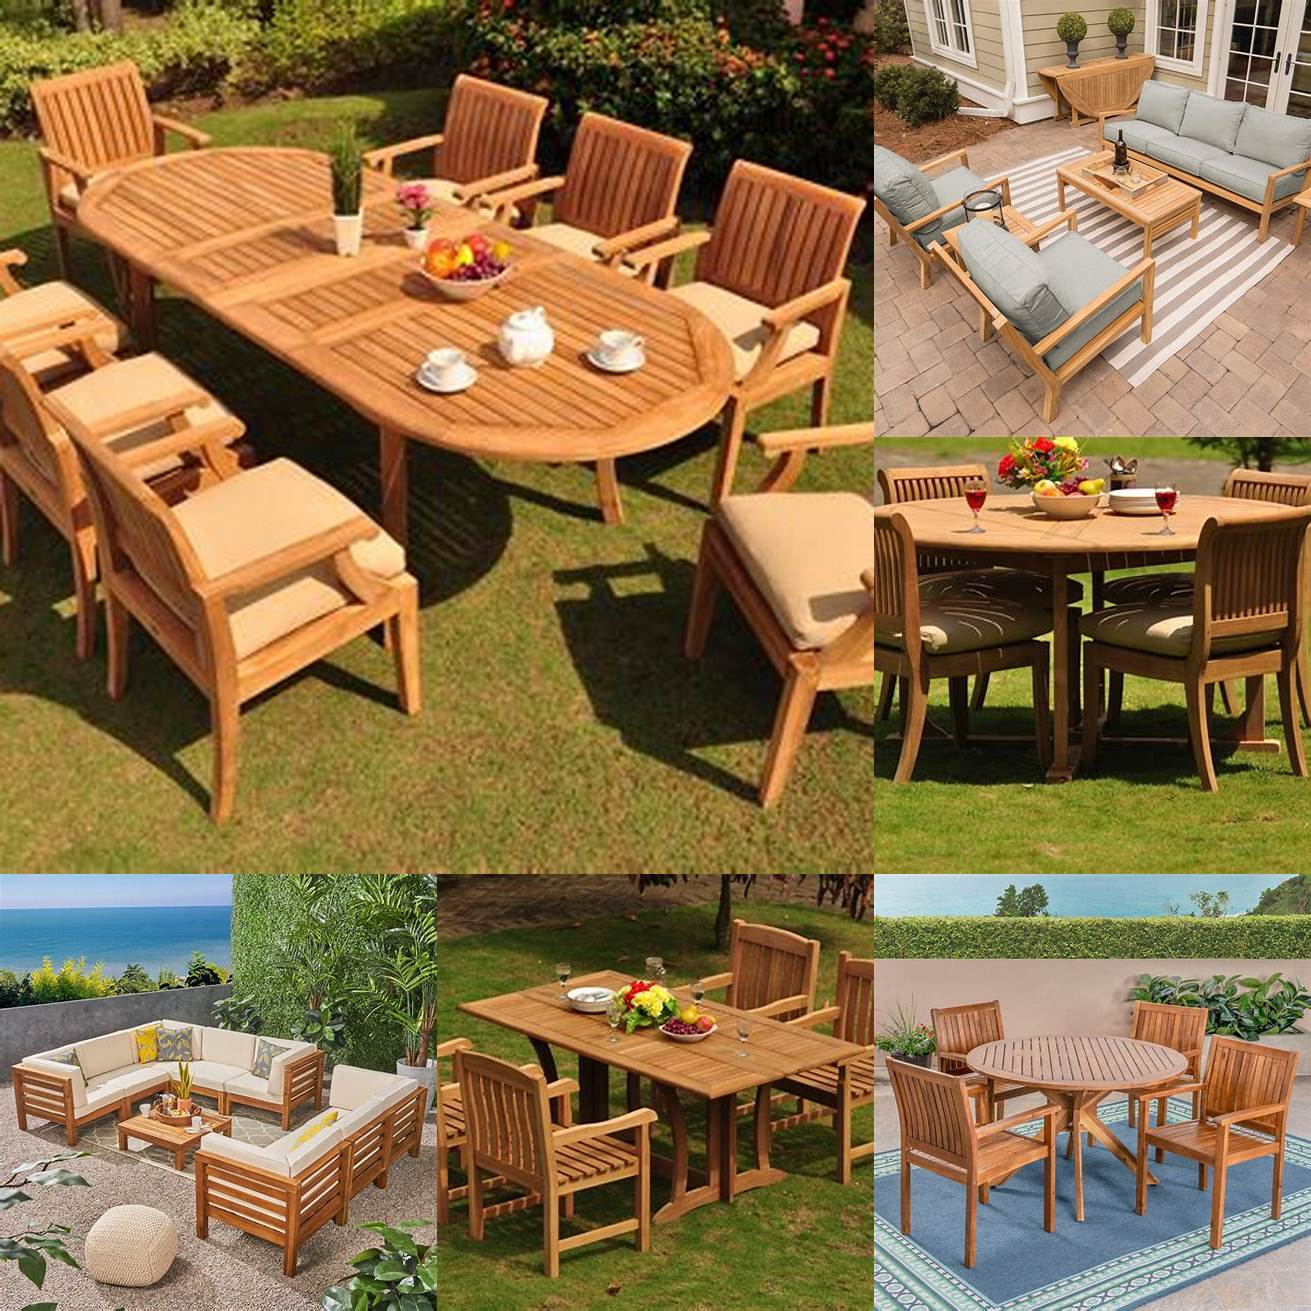 Teak outdoor furniture set on a patio